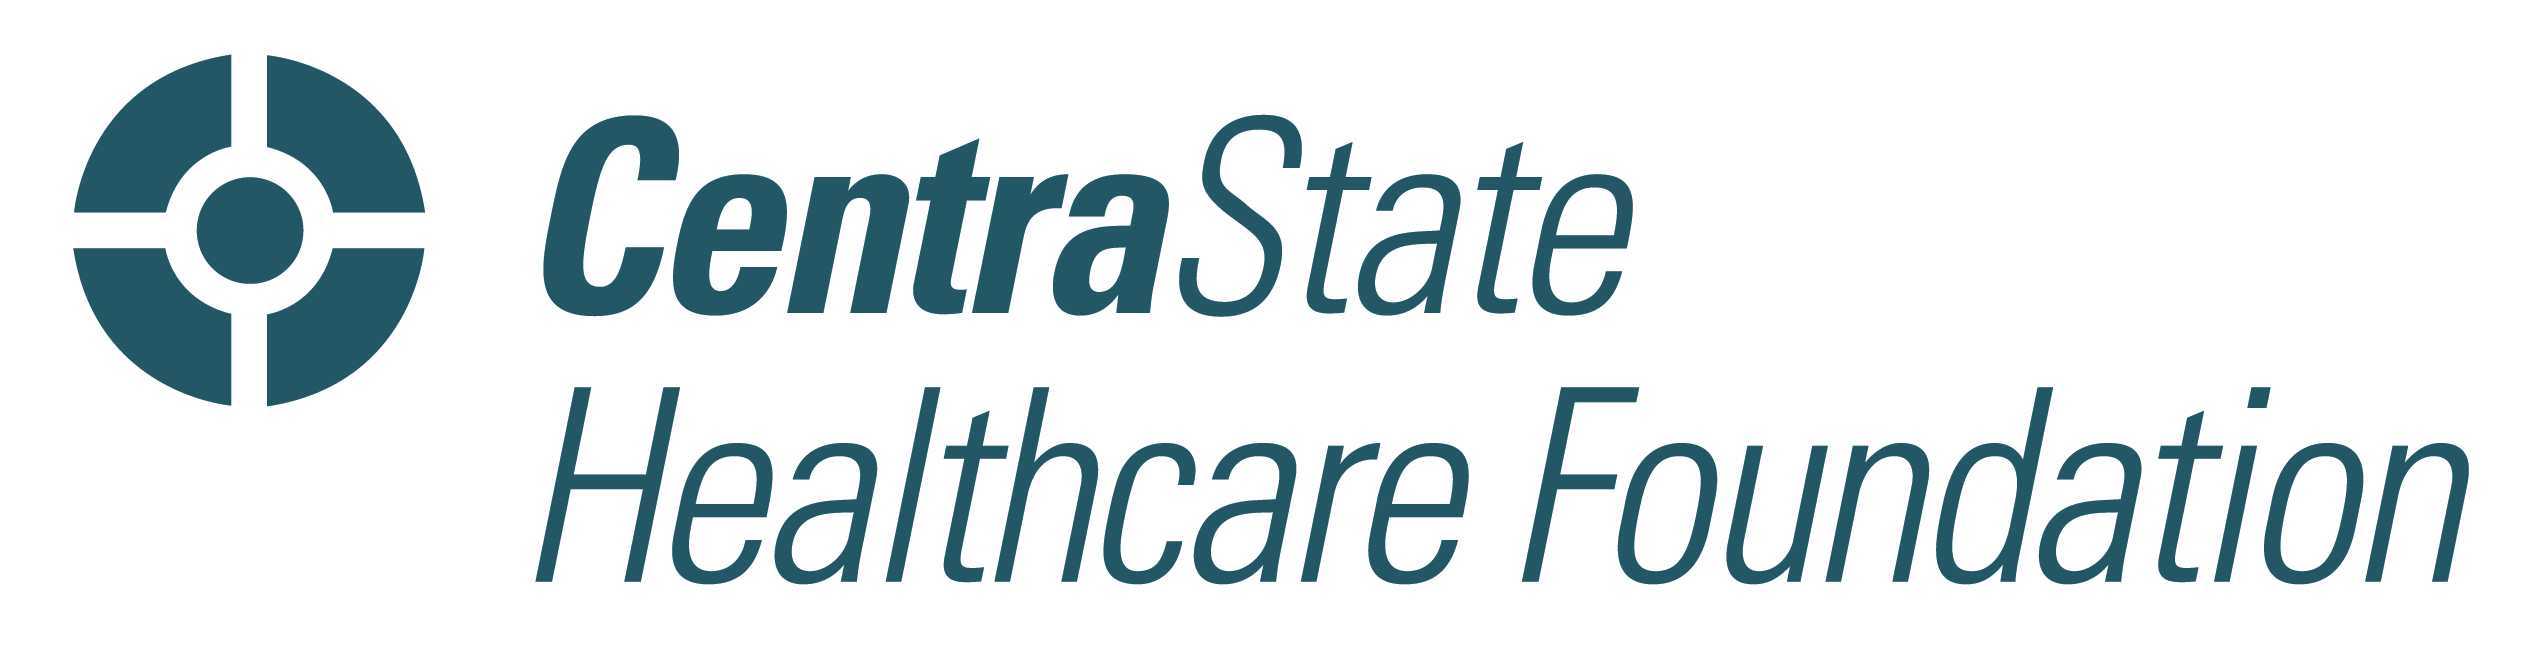 CentraState Healthcare Foundation